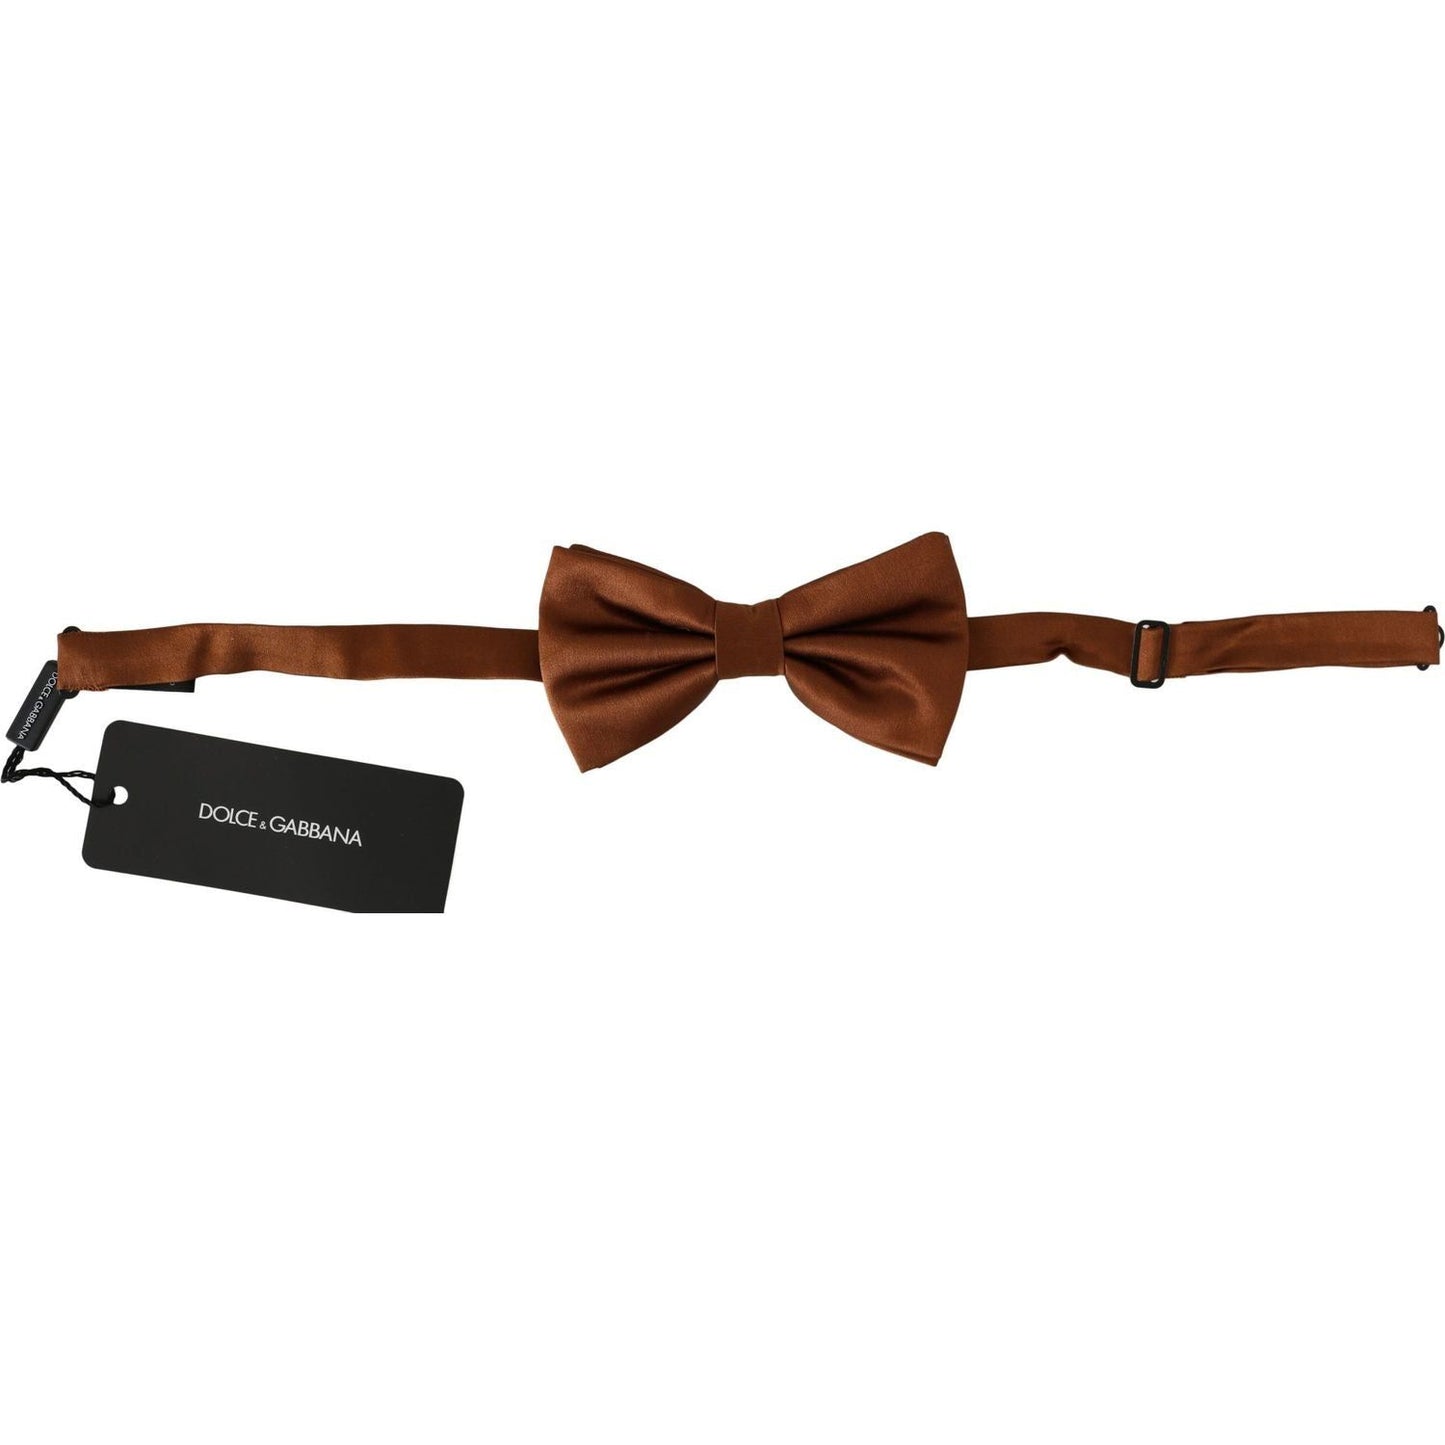 Dolce & Gabbana Elegant Silk Bow Tie in Bronze Elegance Bow Tie men-brown-100-silk-adjustable-neck-papillon-bow-tie-1 IMG_3941-scaled-d359e76c-cb1.jpg